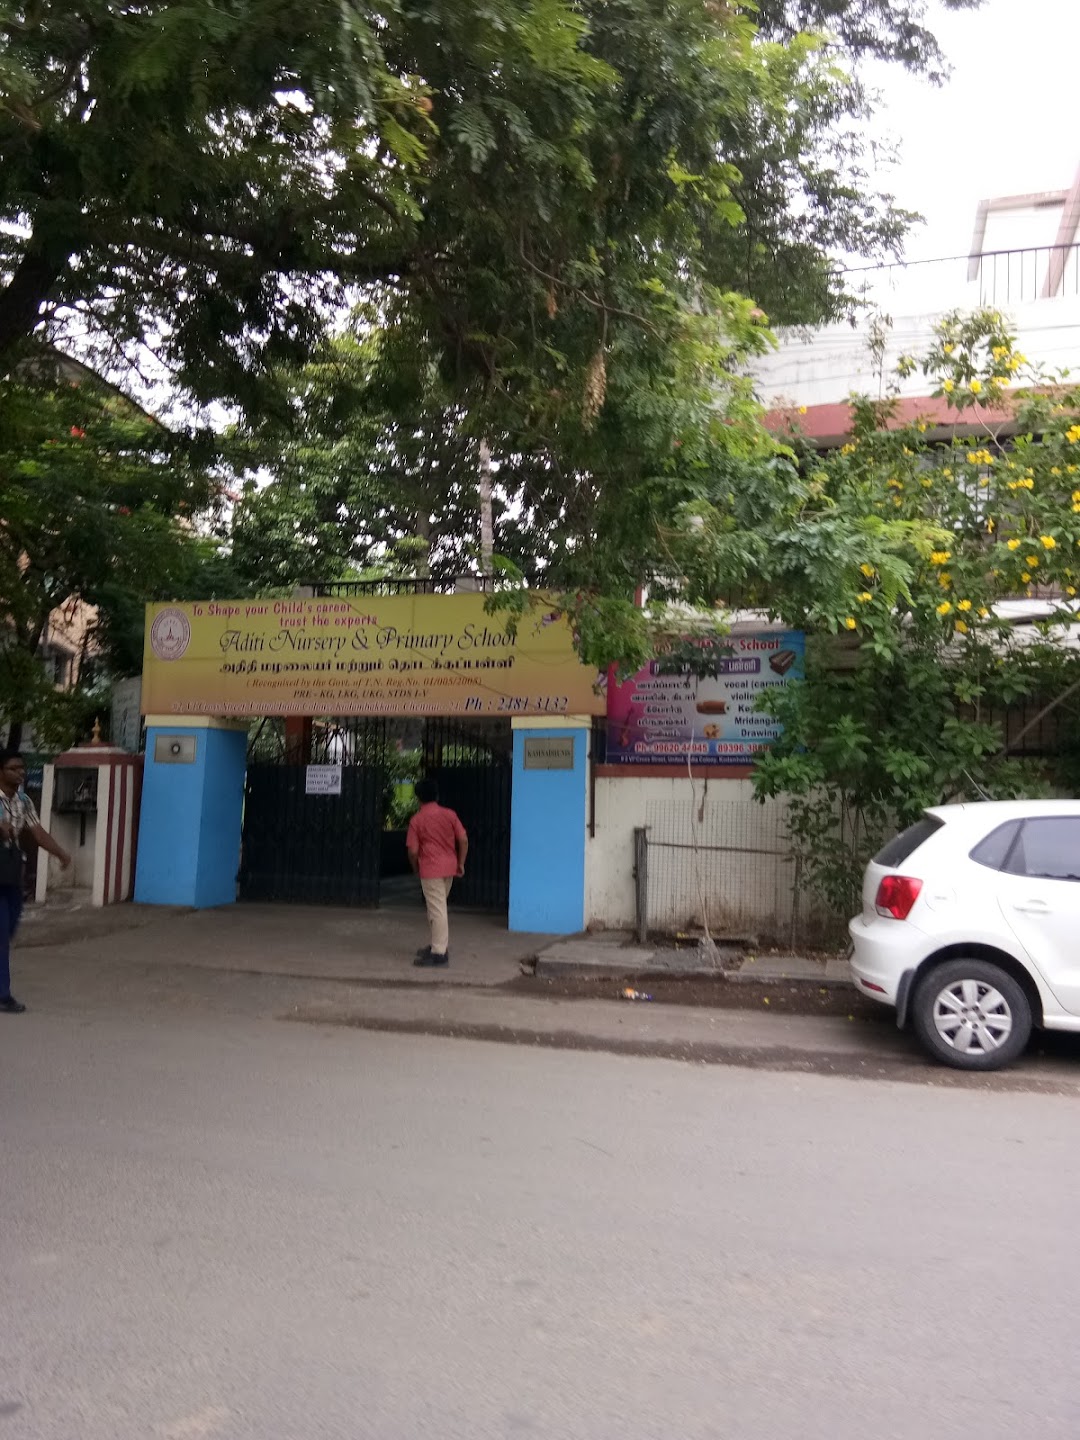 Aditi Nursery and Primary School